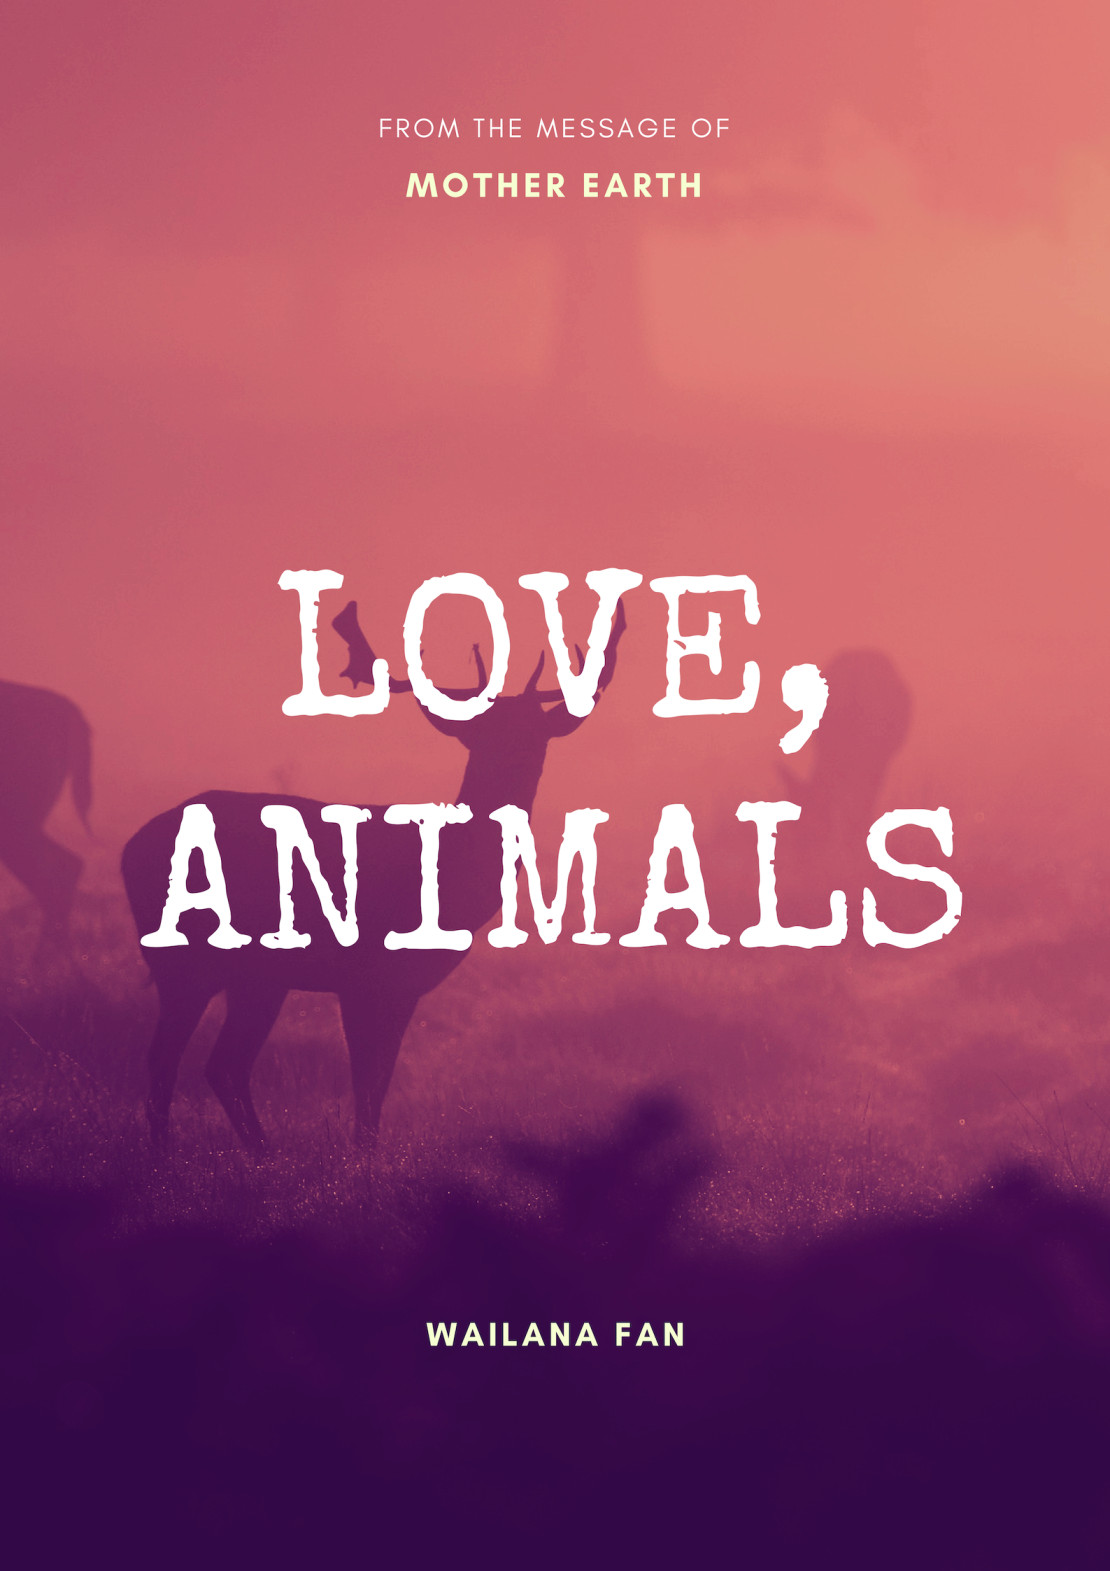 Love Animals - Animals and Nature Photo (41874743) - Fanpop